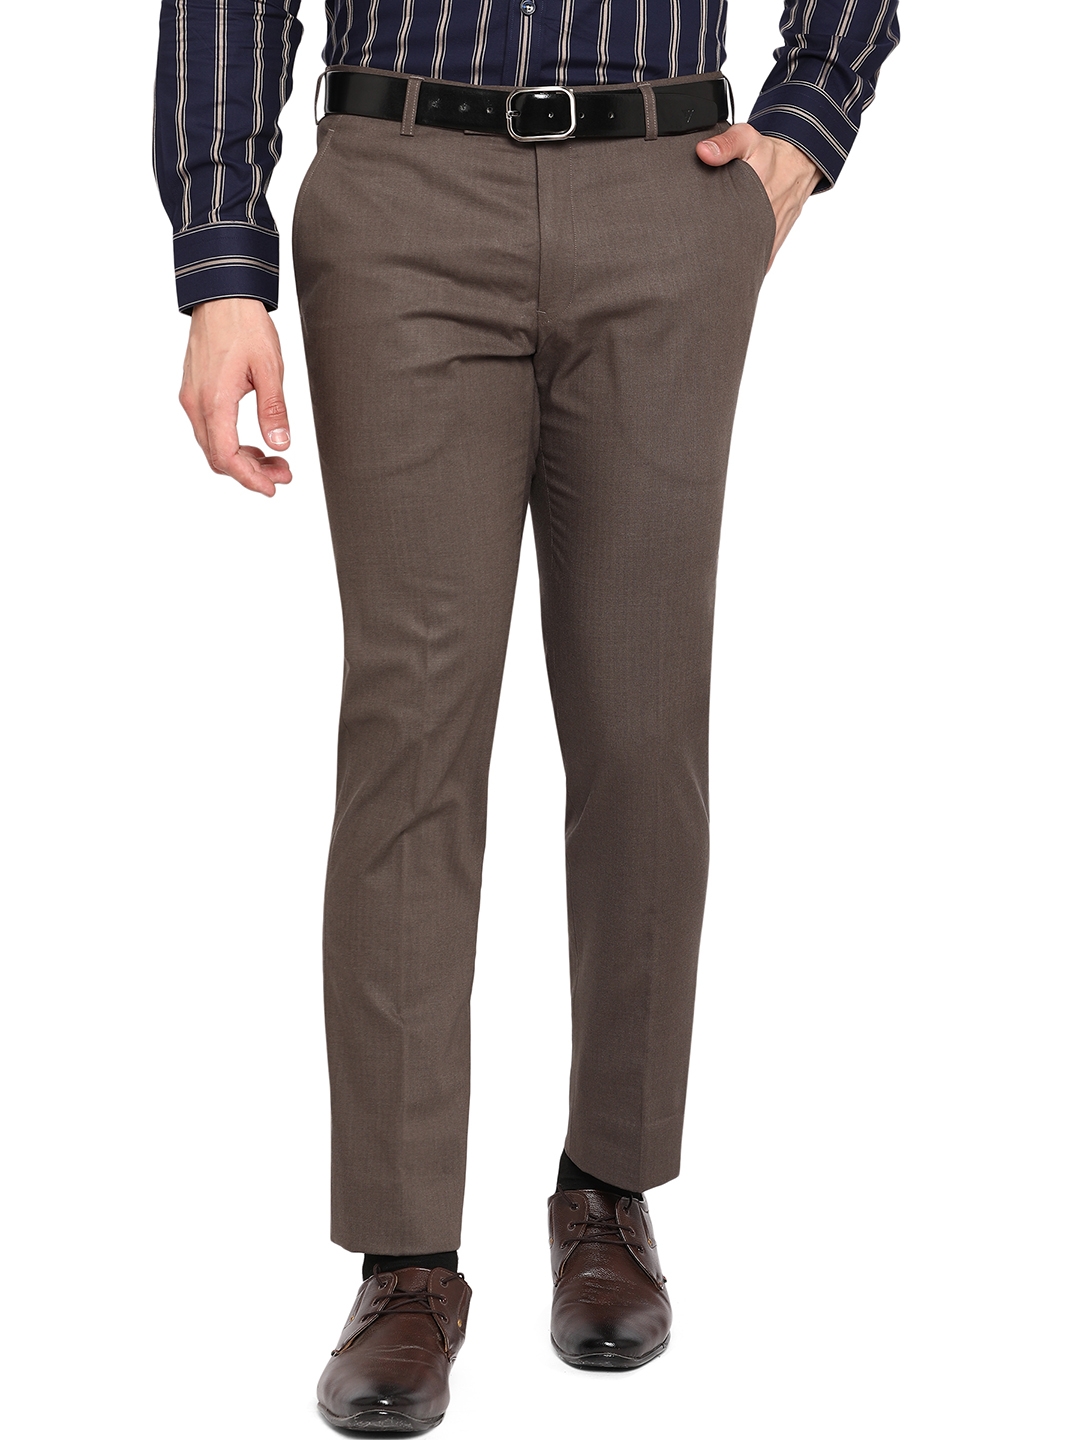 JadeBlue | Grey Solid Formal Trousers (YT48/1,CHARCOAL GREY SELF)